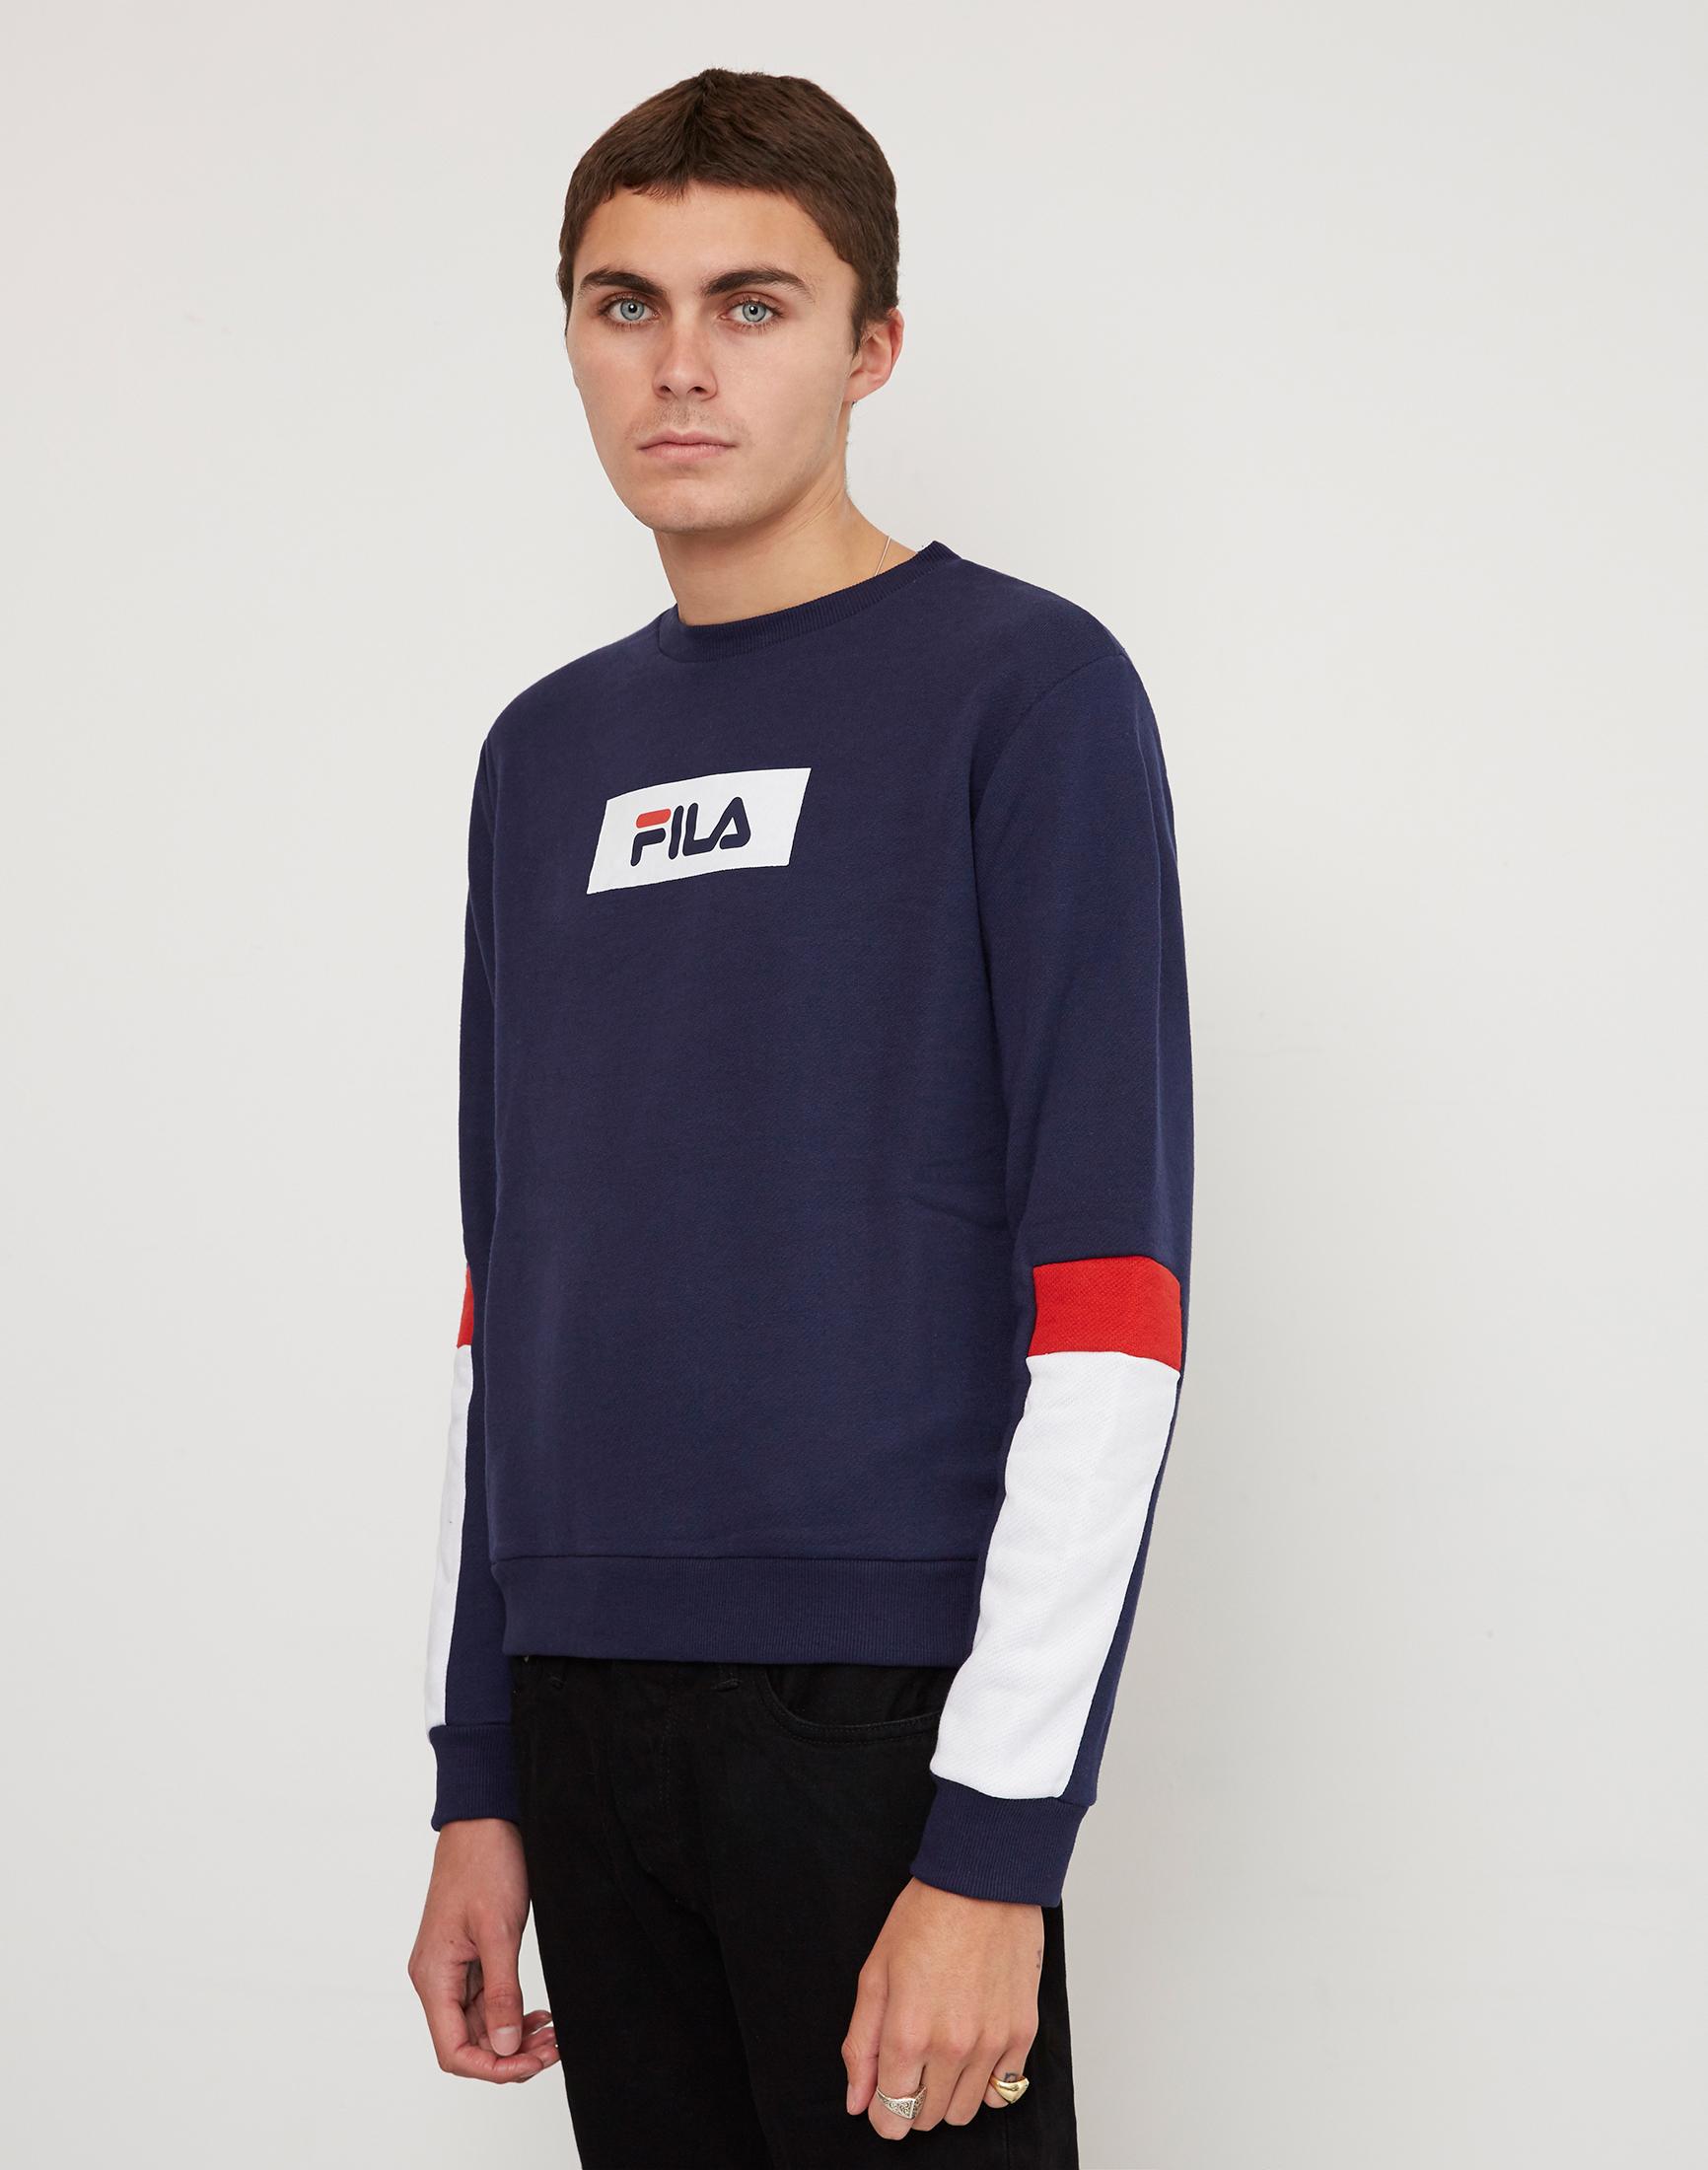 Lyst - Fila Tommy Fashion Crew Neck Sweatshirt Navy in Blue for Men